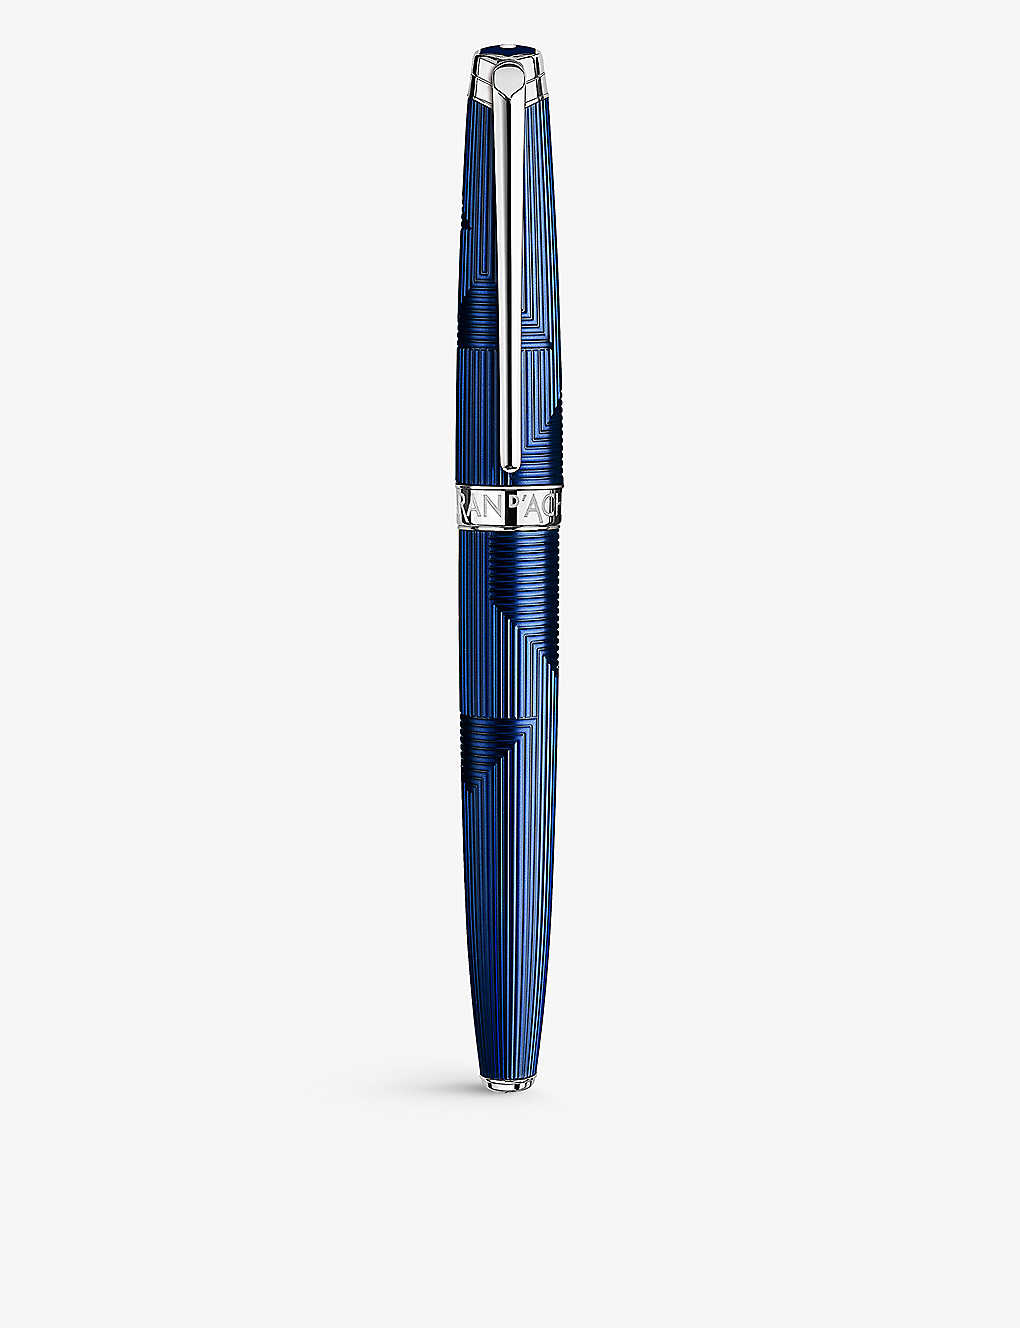 CARAN DACHE Leman Bleu Marin ウェーブパターン ラッカーコート ブラス 万年筆 Leman Bleu Marin wave-pattern lacquer-coated brass fountain pen BLUE